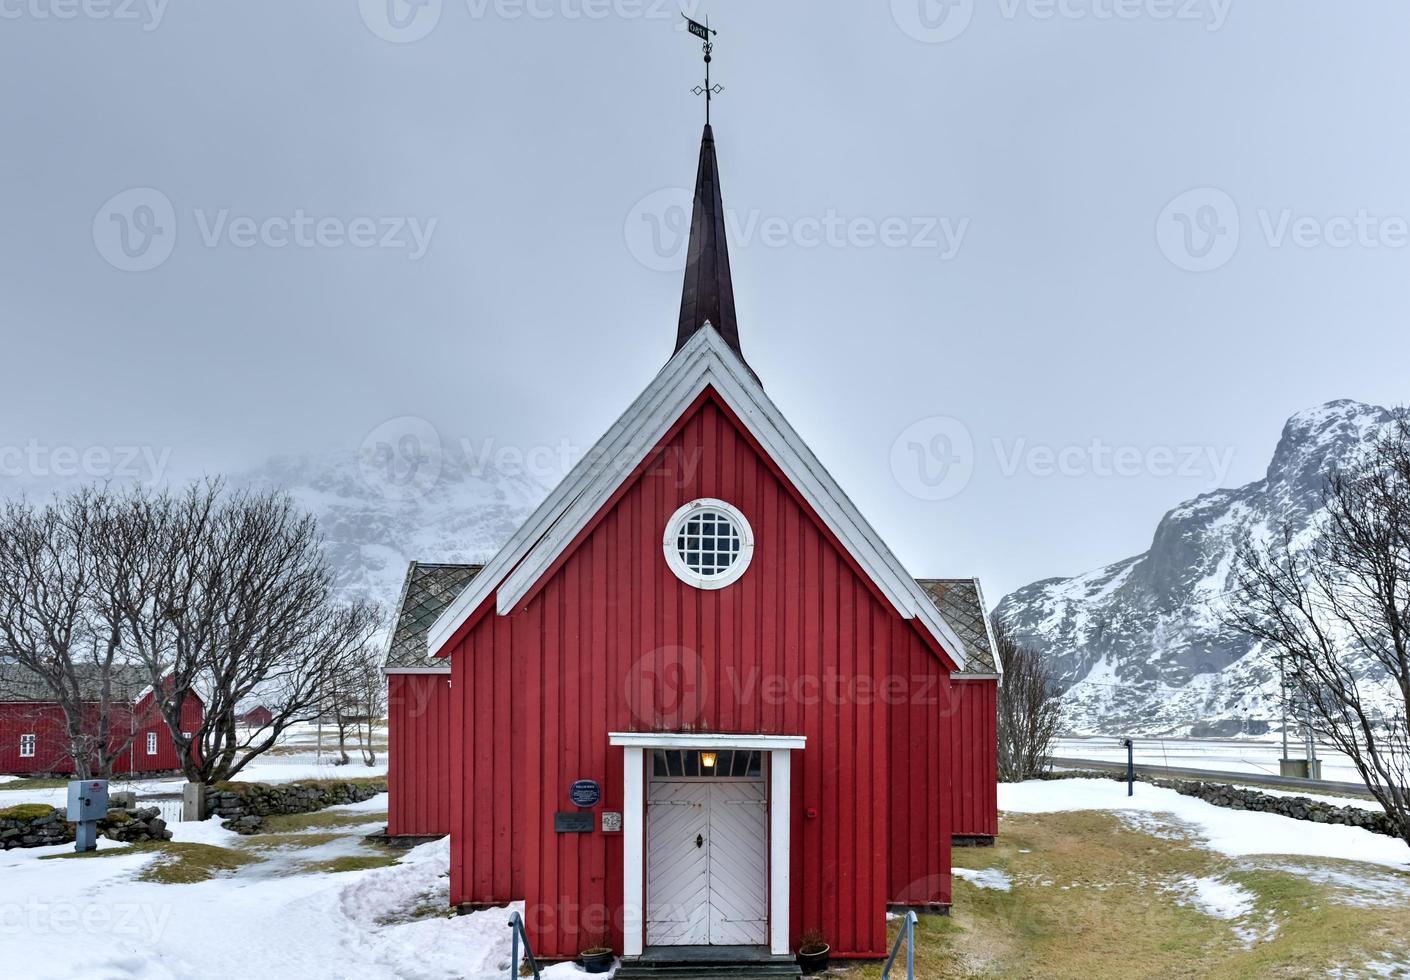 cênica velha igreja vermelha em flakstad nas ilhas lofoten, noruega no inverno. foto